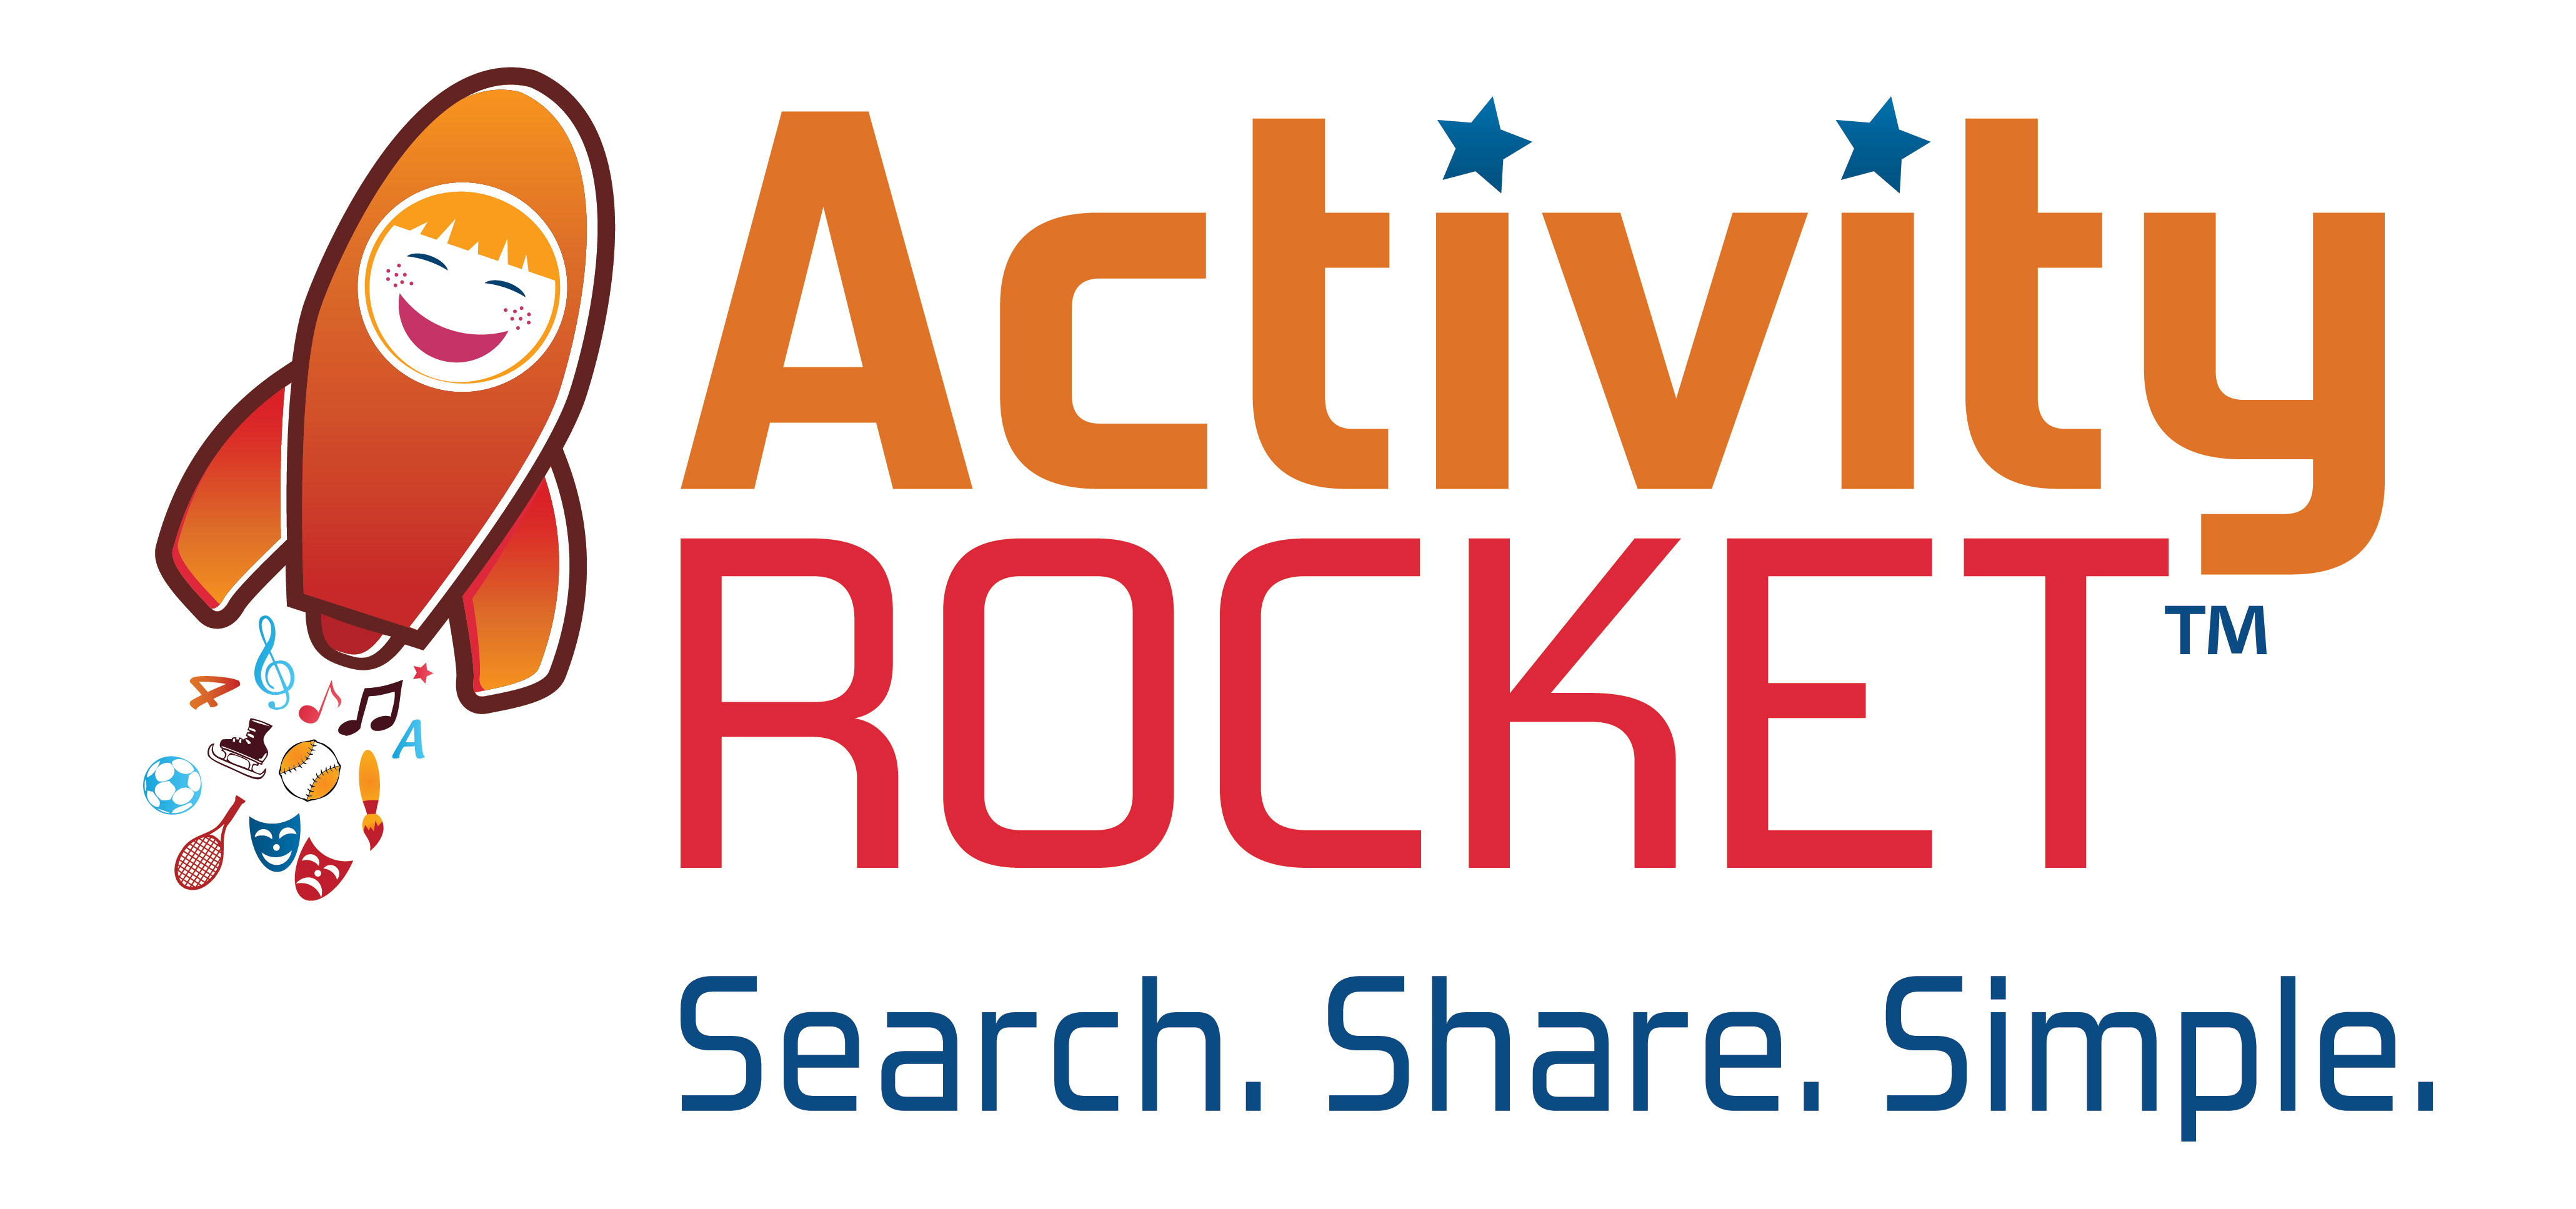 activity rocket